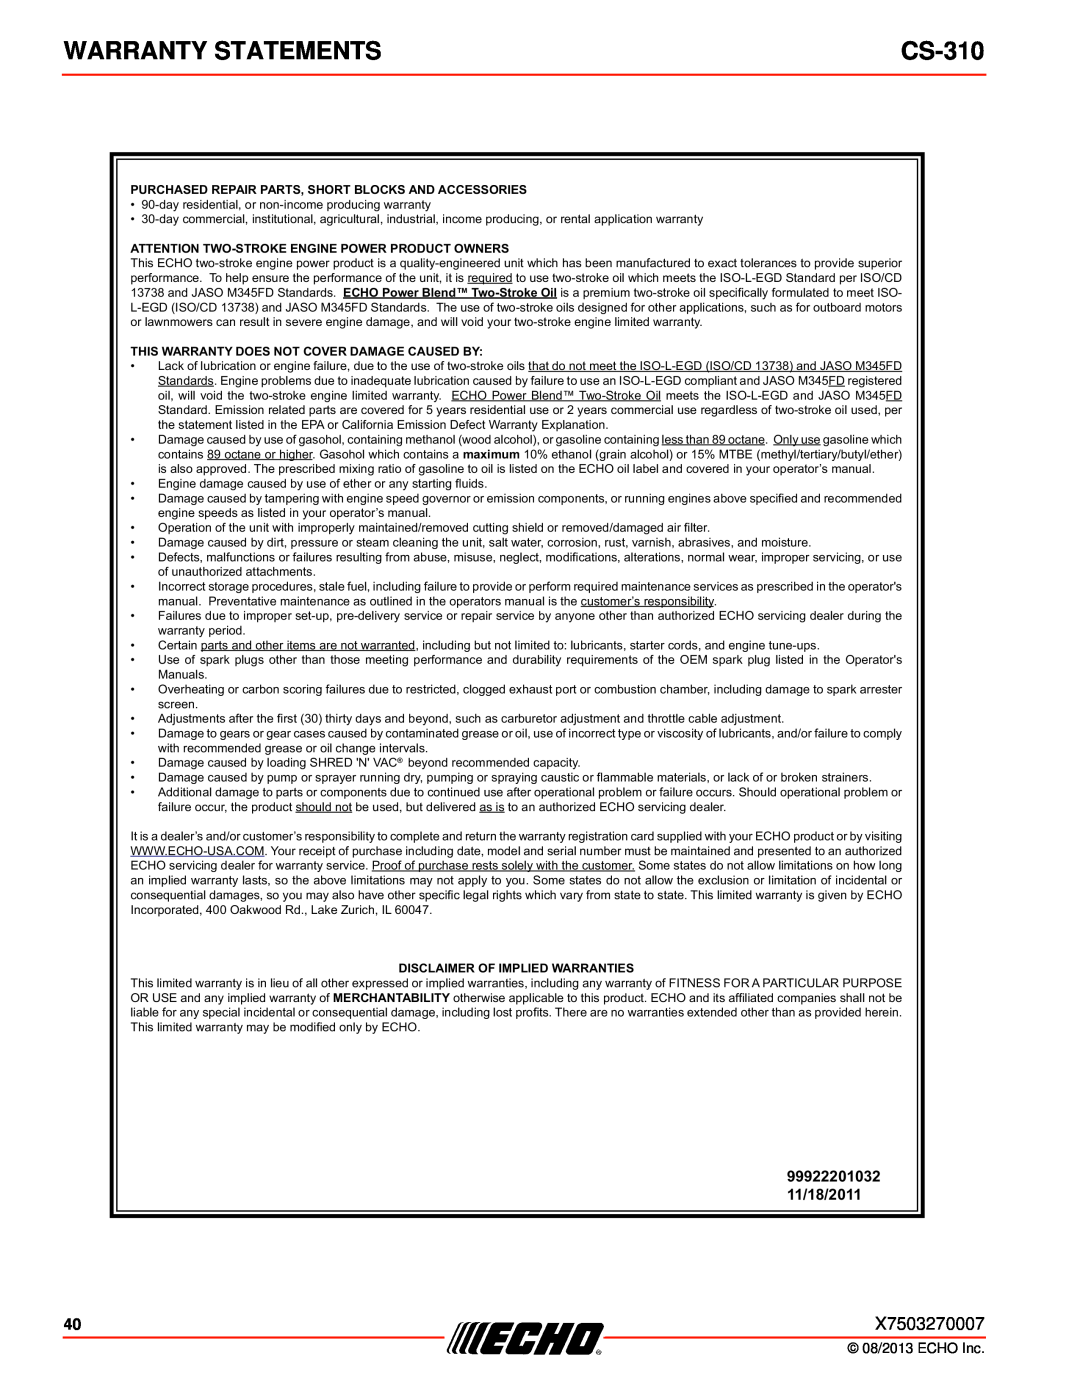 Echo CS-310 instruction manual Warranty Statements, 99922201032 11/18/2011 